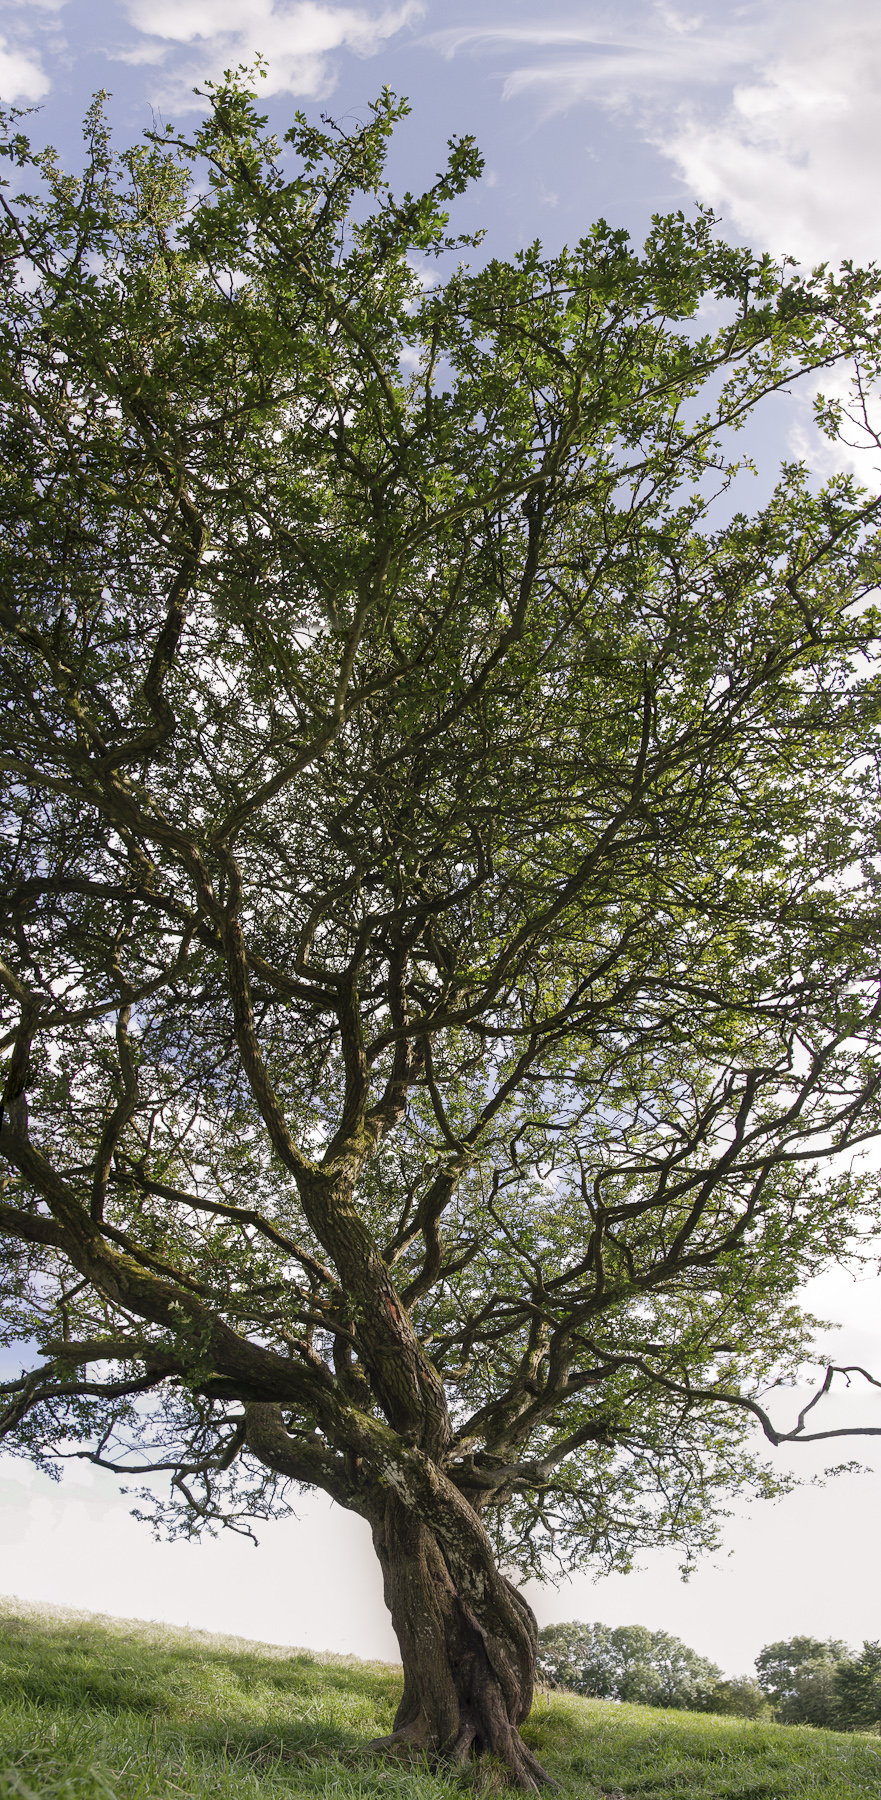 L'arbre à fée de Tara - Carnet de voyage en Irlande